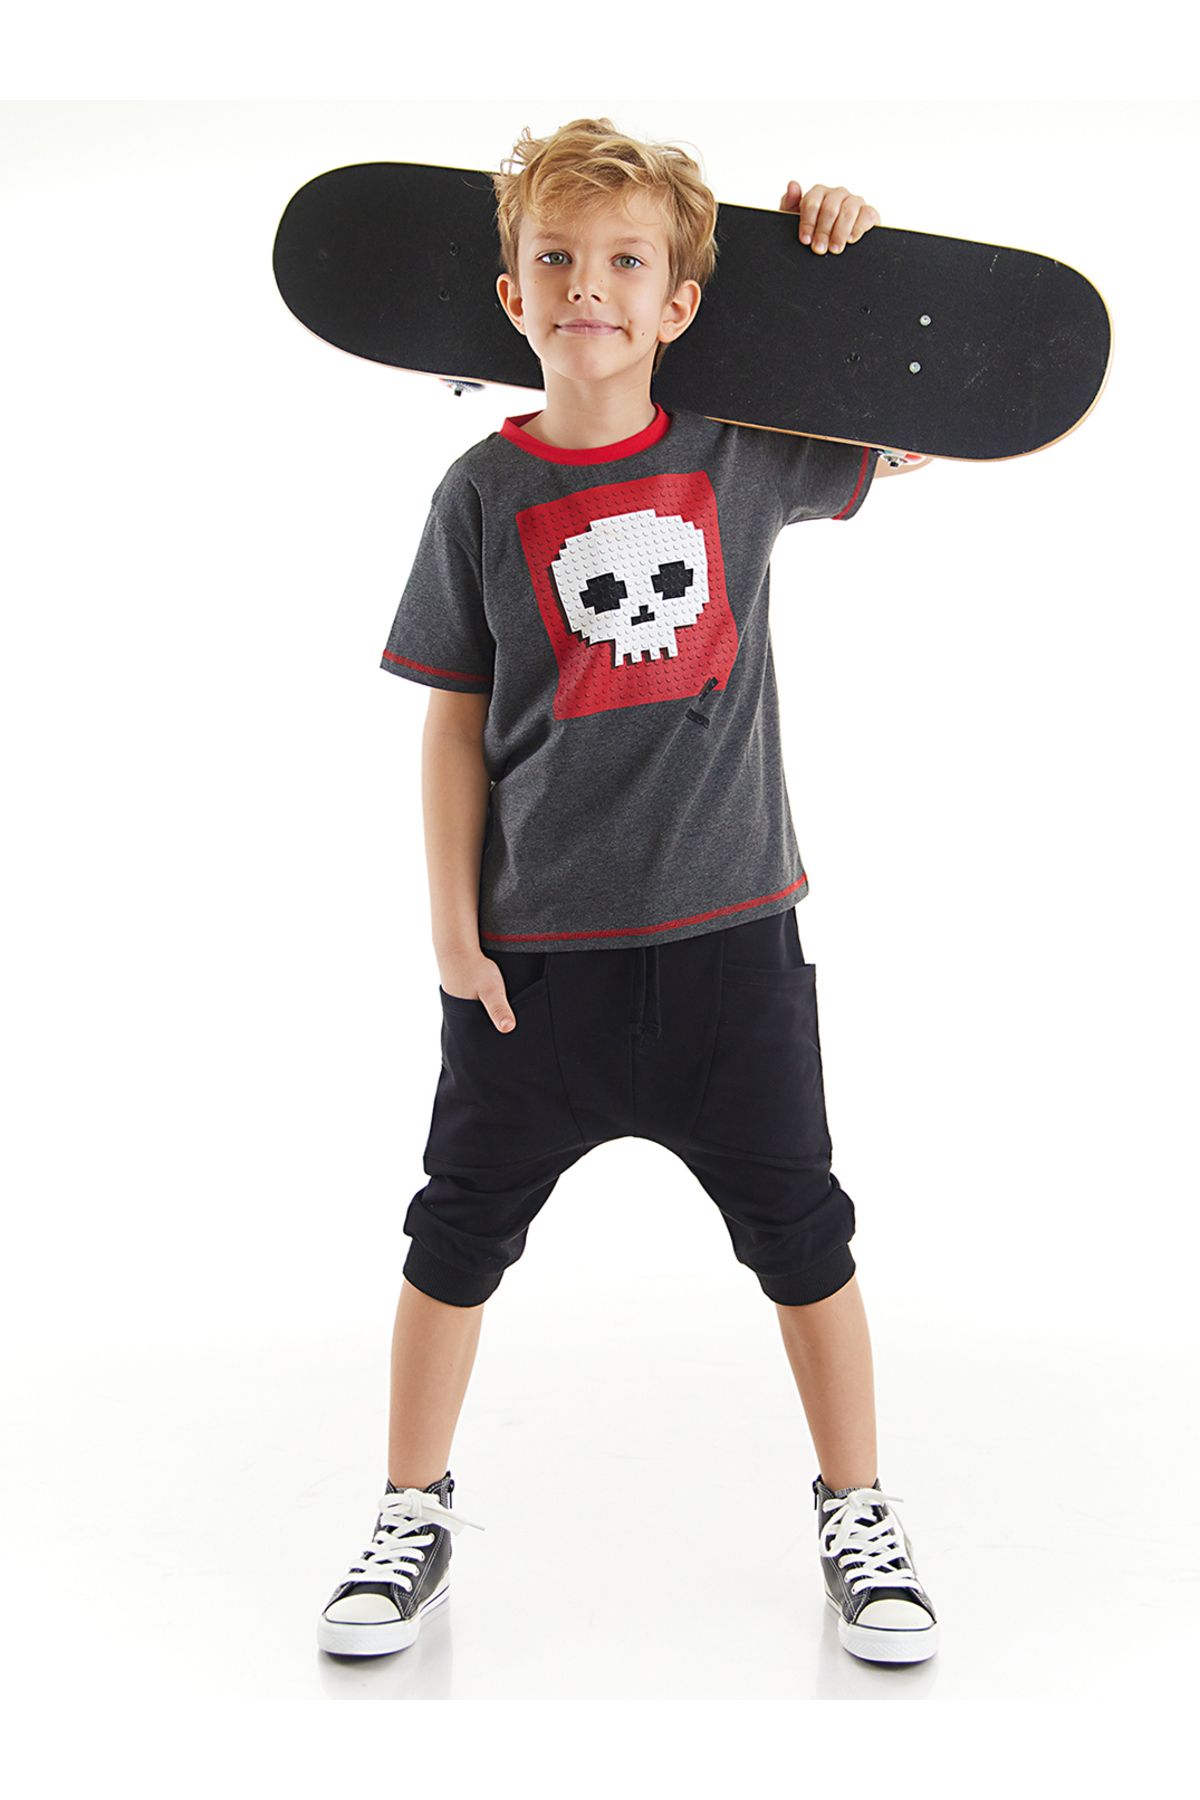 MSHB&G Skull Erkek Çocuk T-shirt Kapri Şort Takım